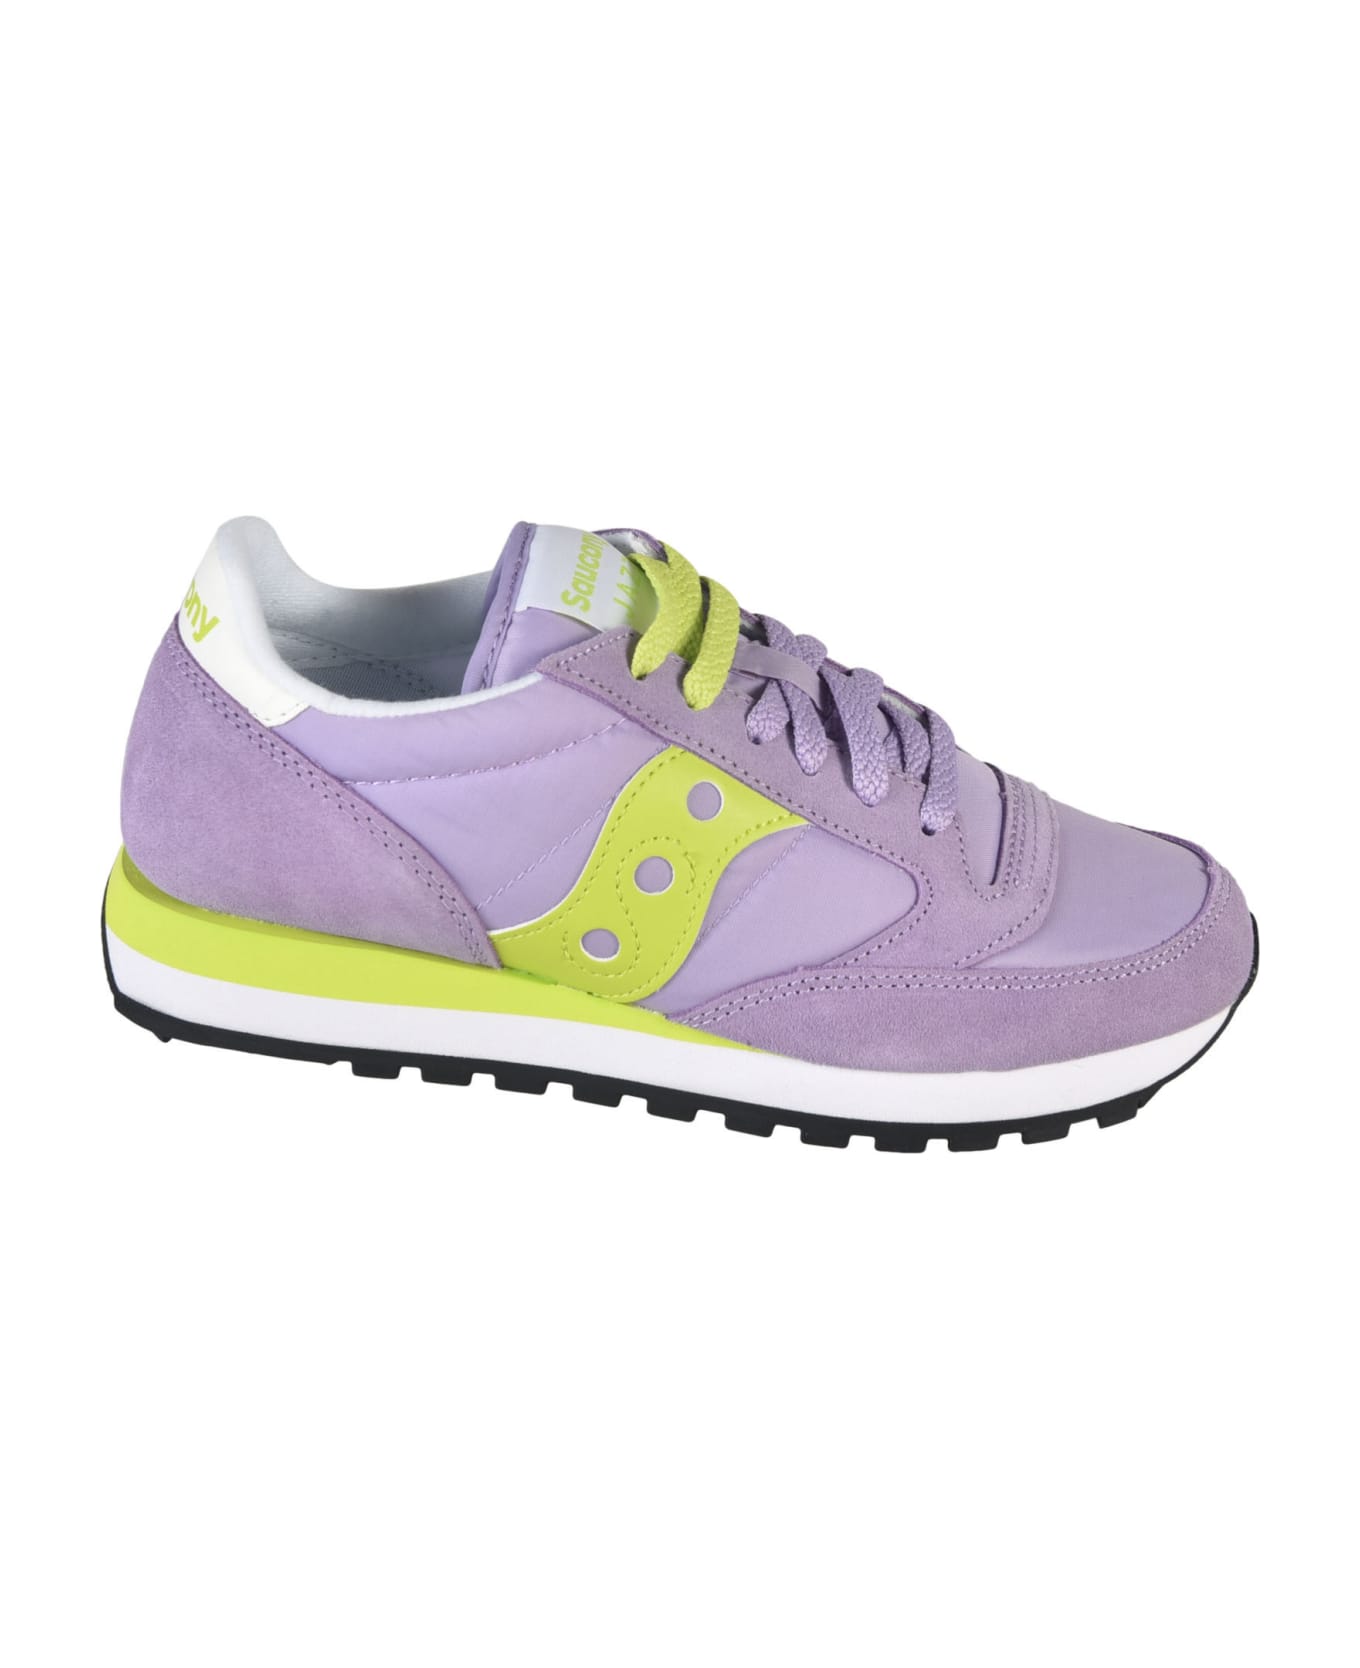 Saucony Jazz Original Sneakers - Purple/Lime スニーカー